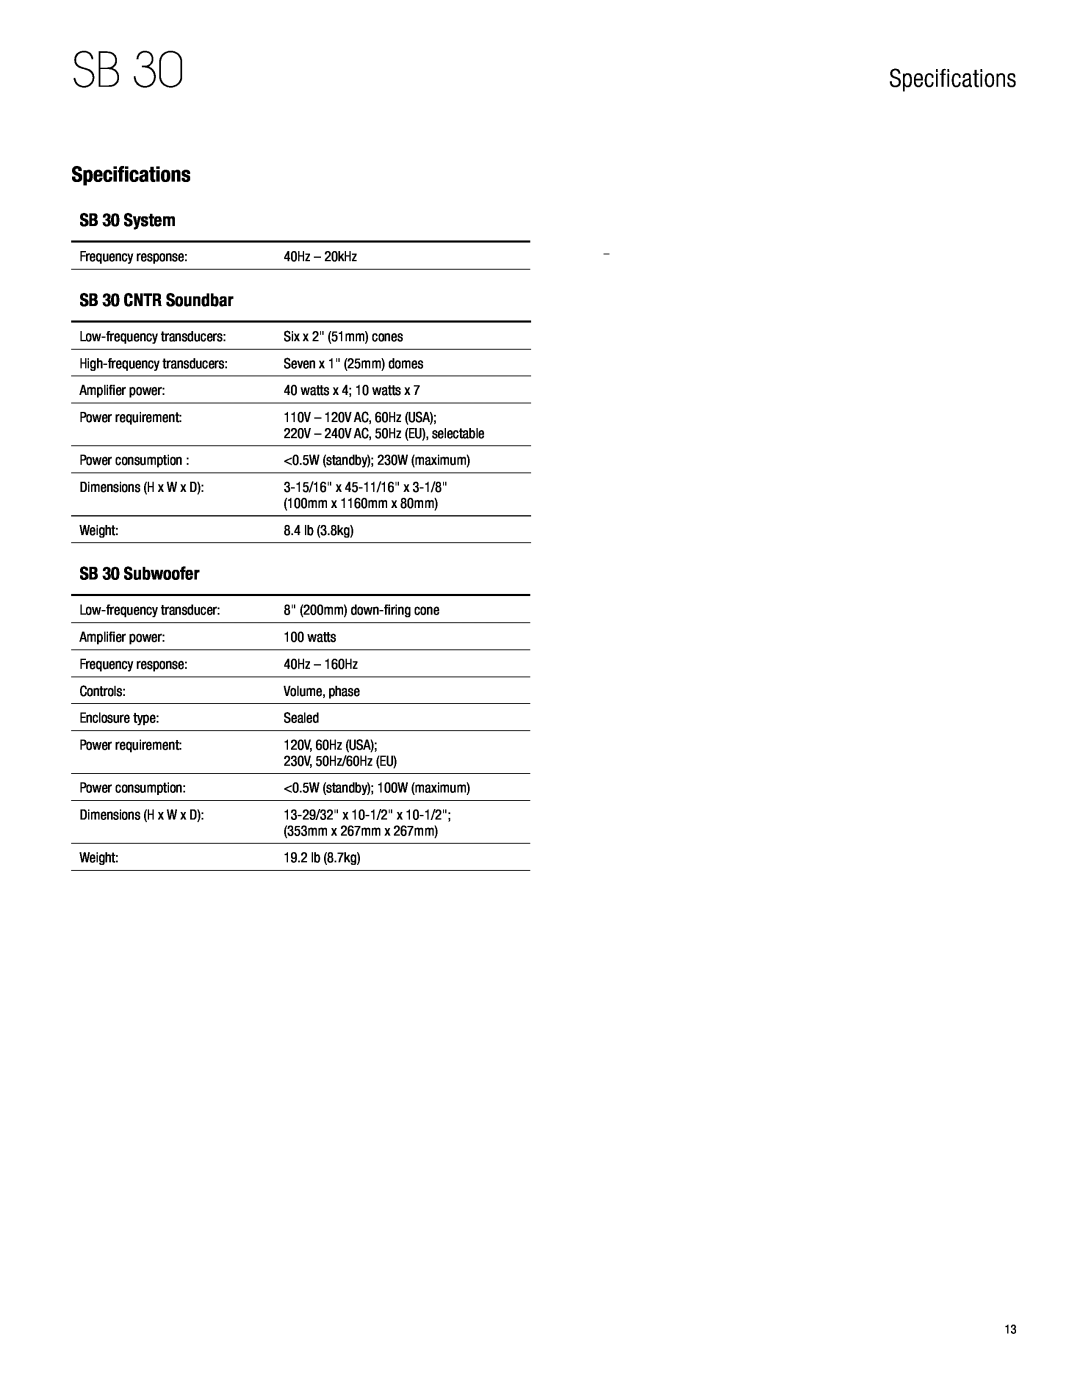 Harman-Kardon HKSB30BLK owner manual Specifications, SB 30 System, SB 30 CNTR Soundbar, SB 30 Subwoofer 